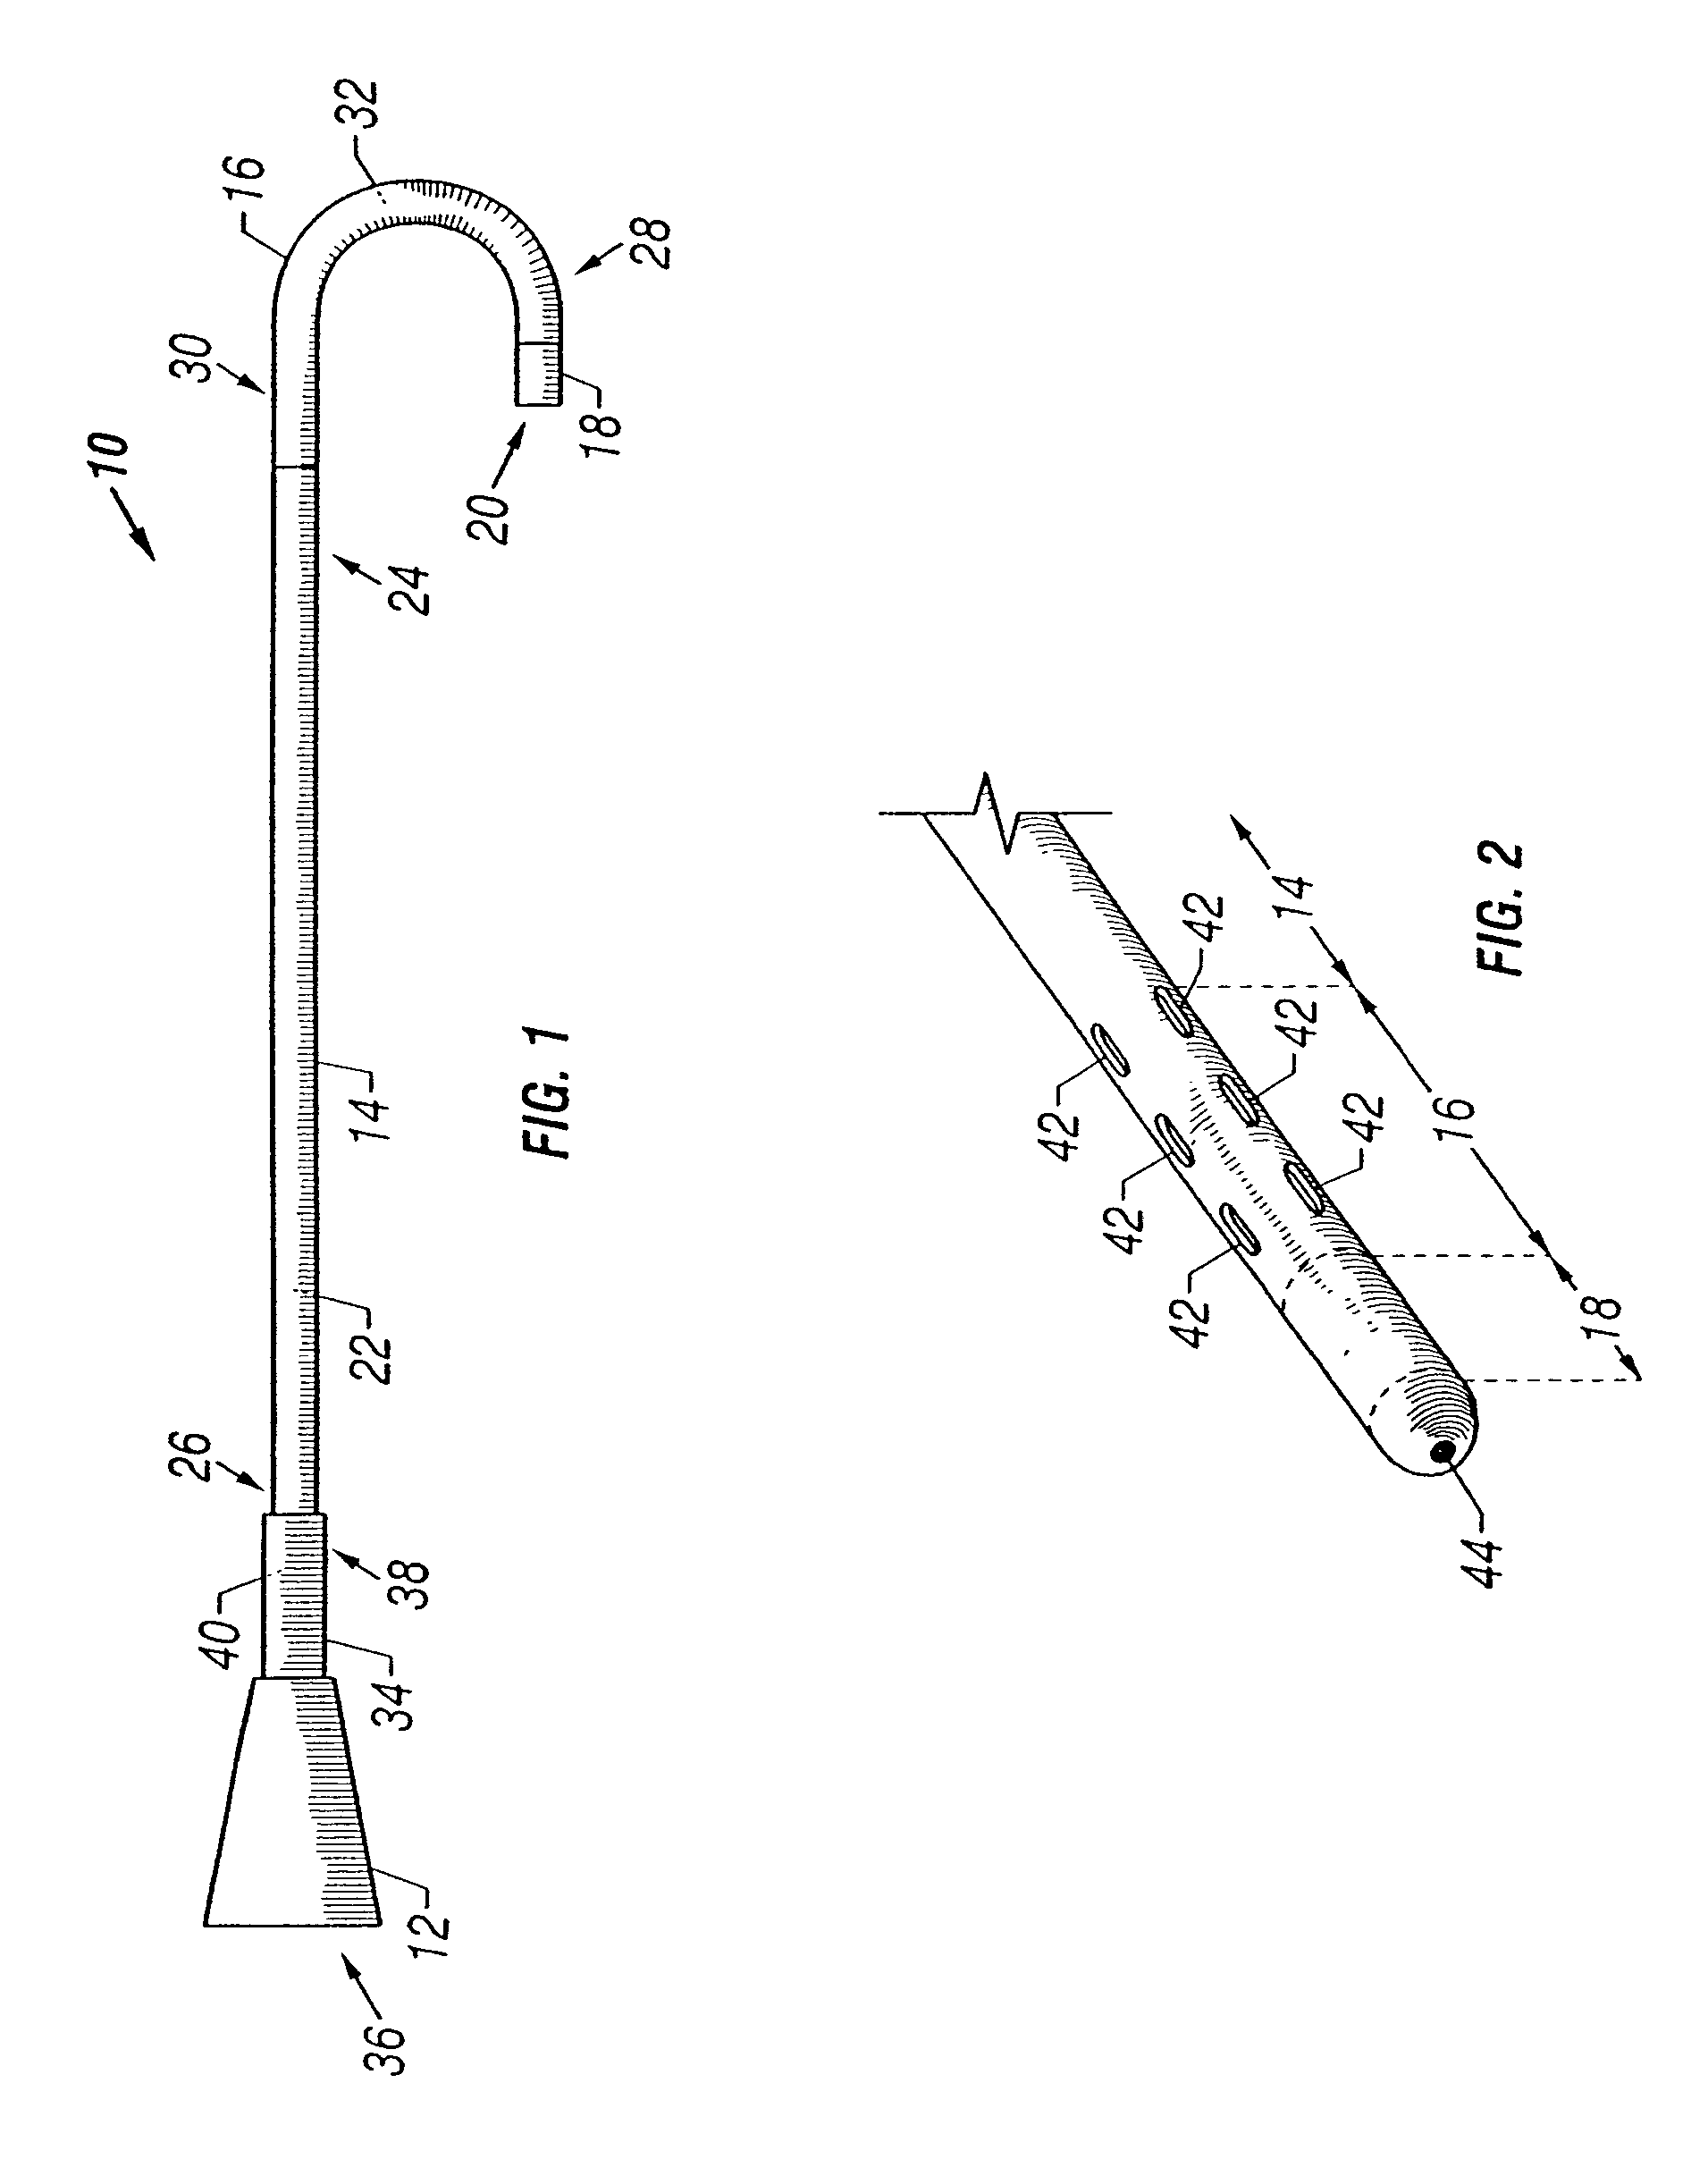 Anti-recoil catheter